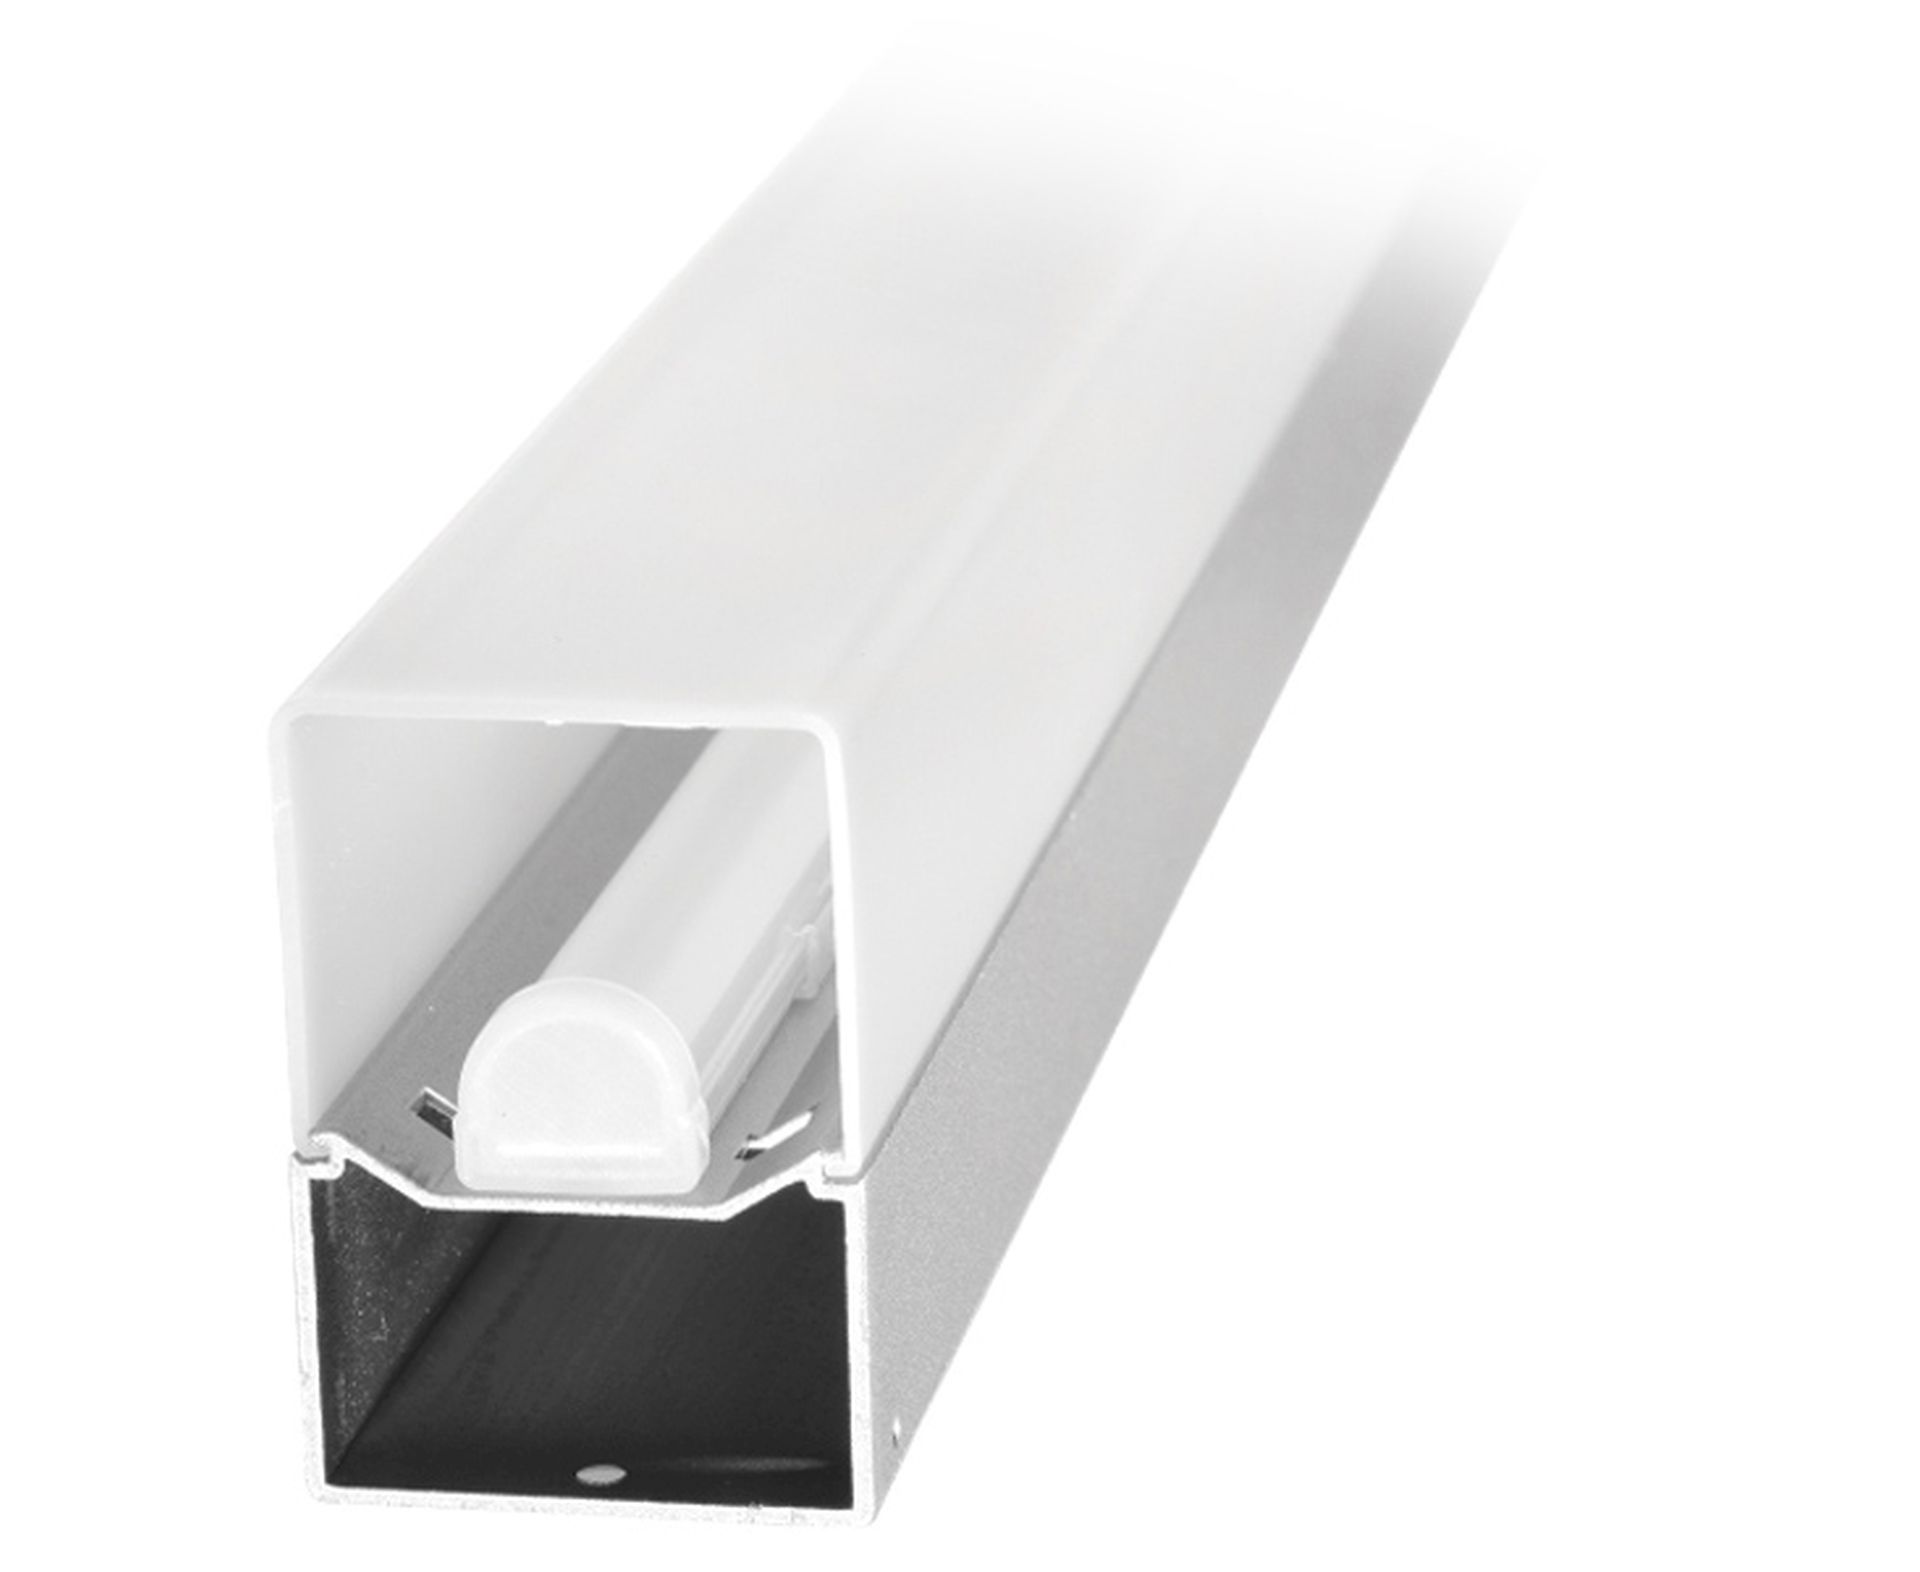 Ecolite Chrómové LED svietidlo pod kuchynskú linku 60cm 15W TL4130-LED15W/CHR